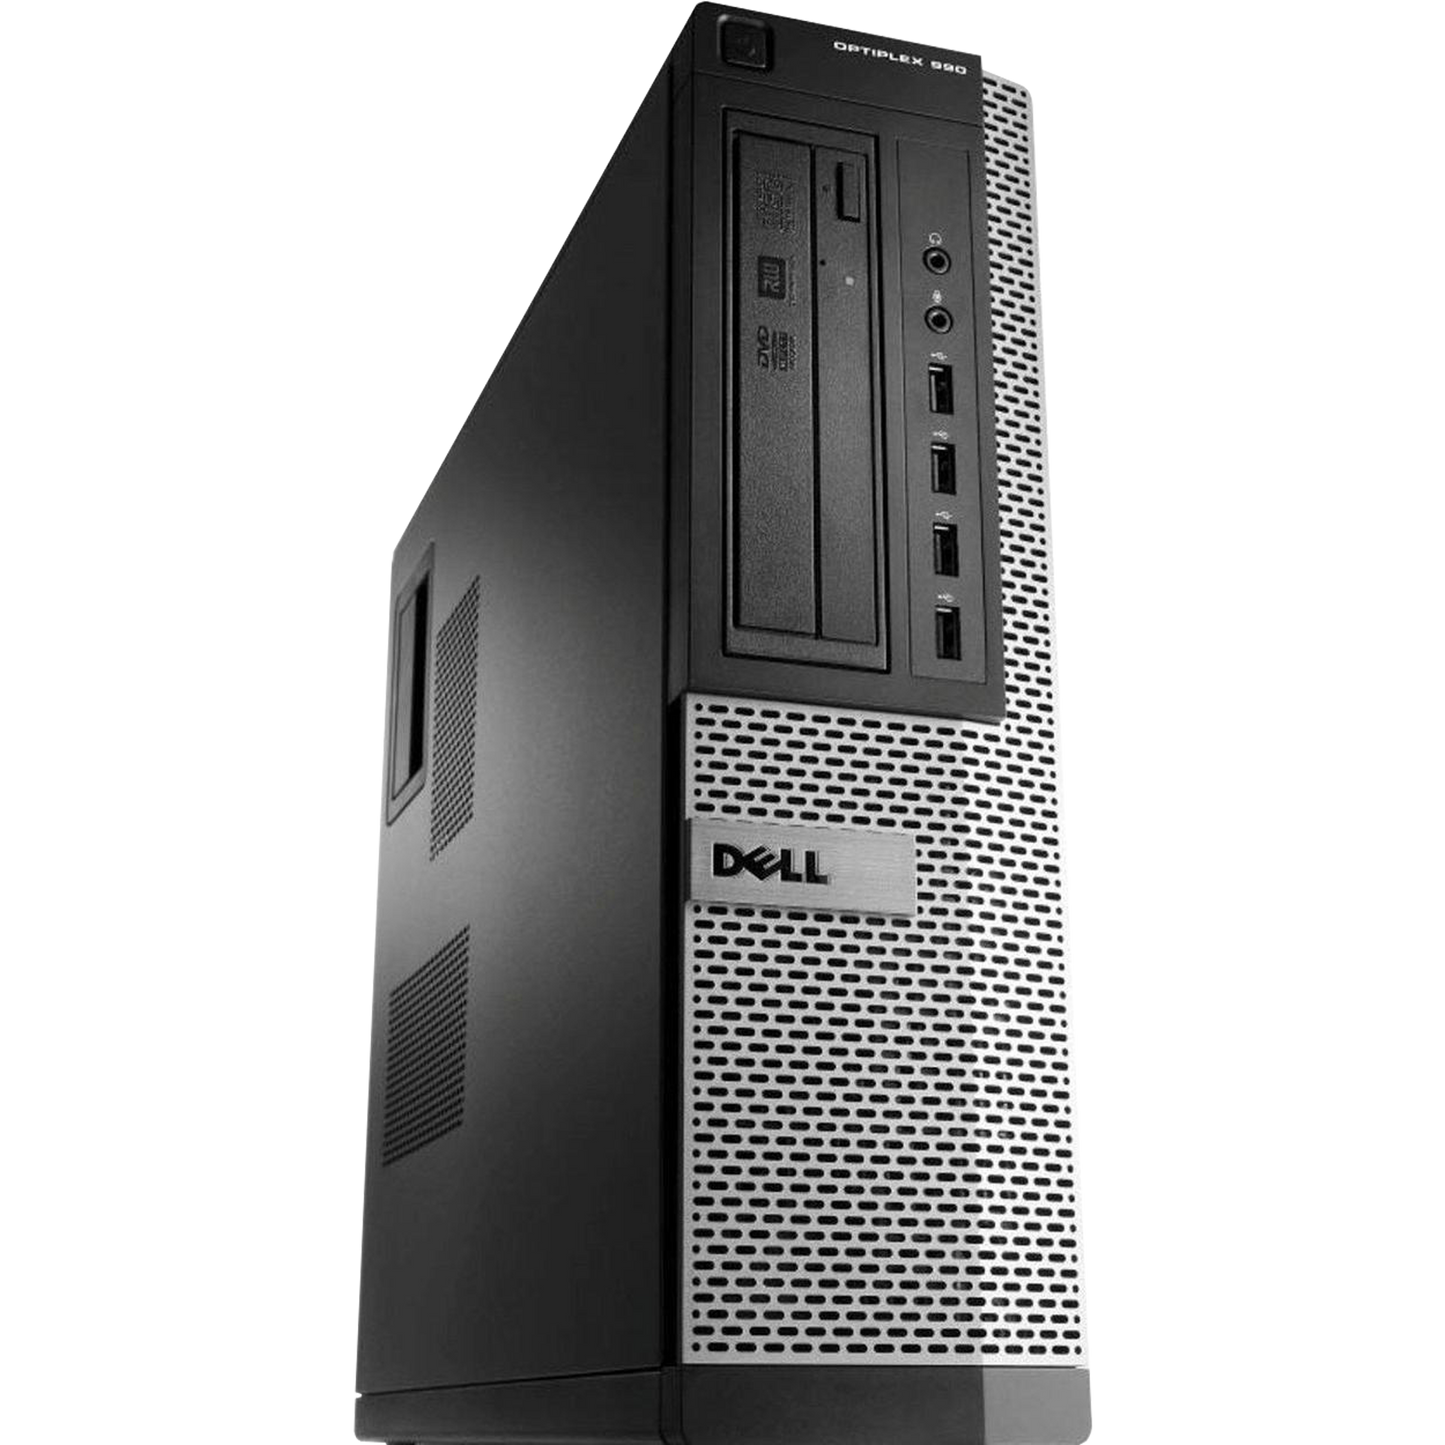 Dell OptiPlex GX990 Intel i5, 2nd Gen Desktop PC with 19" Monitor Desktop Computers